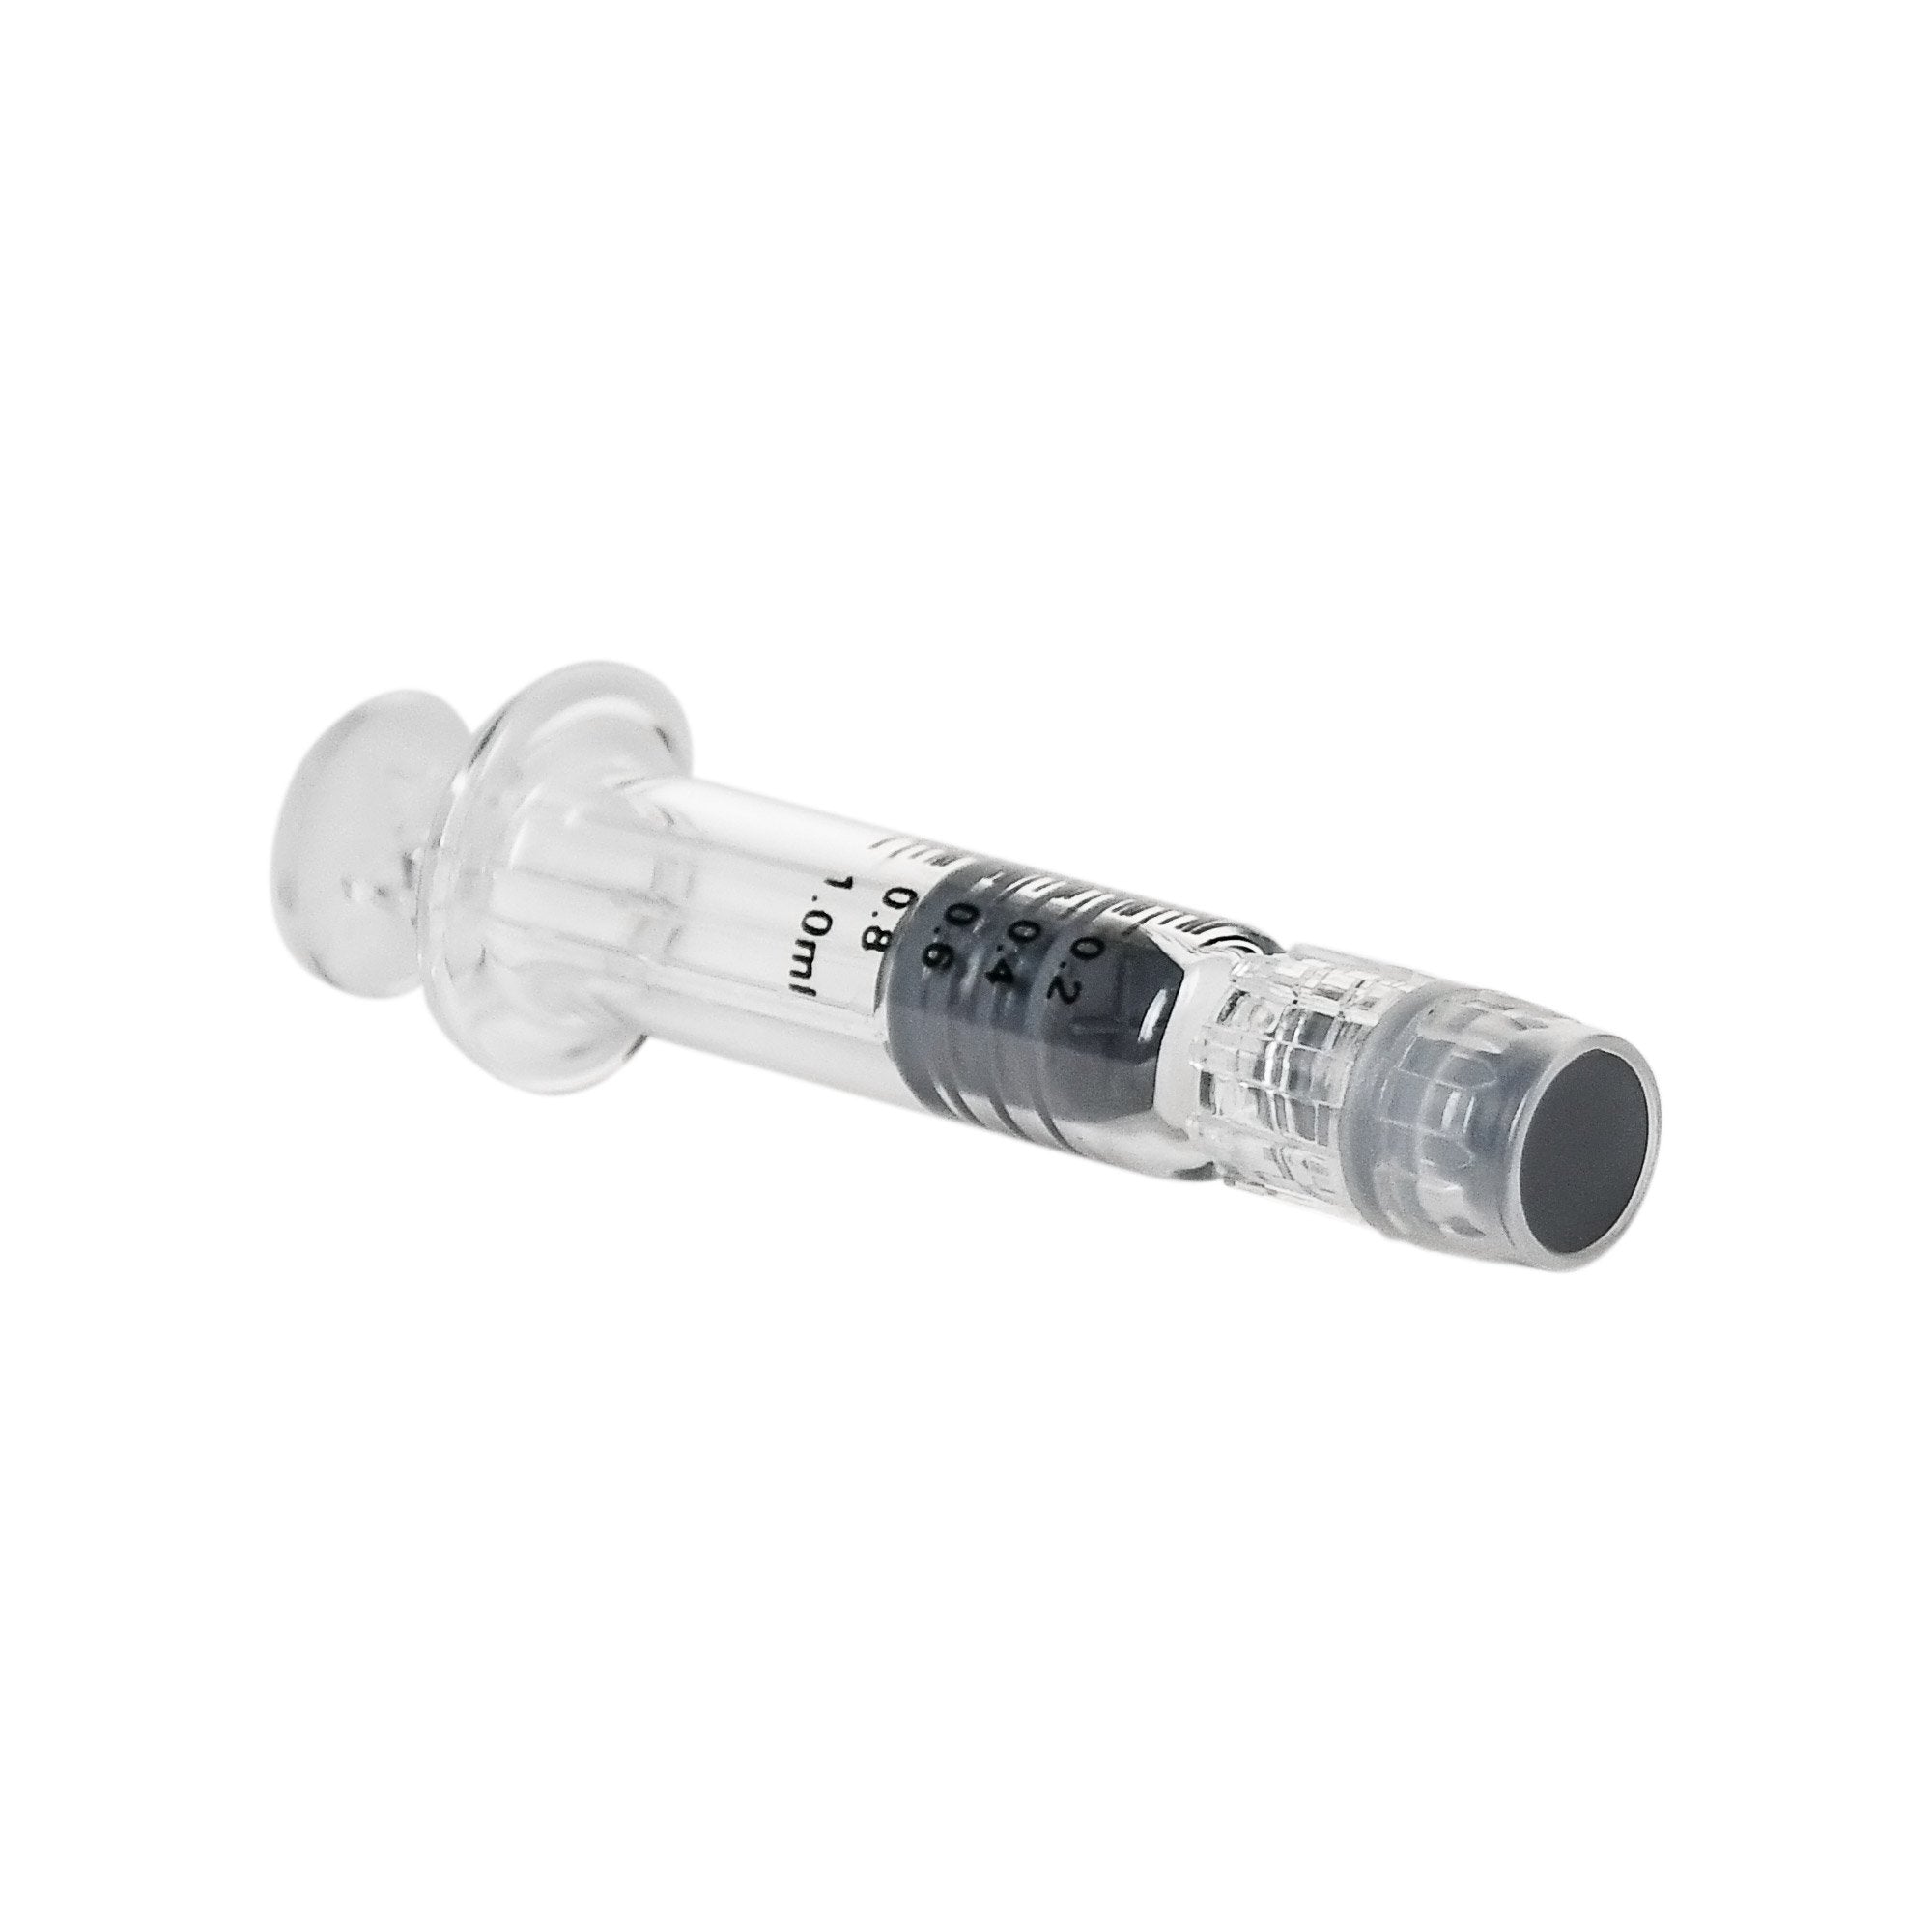 1ml Glass Luer Lock Applicator Syringe - 100 Count